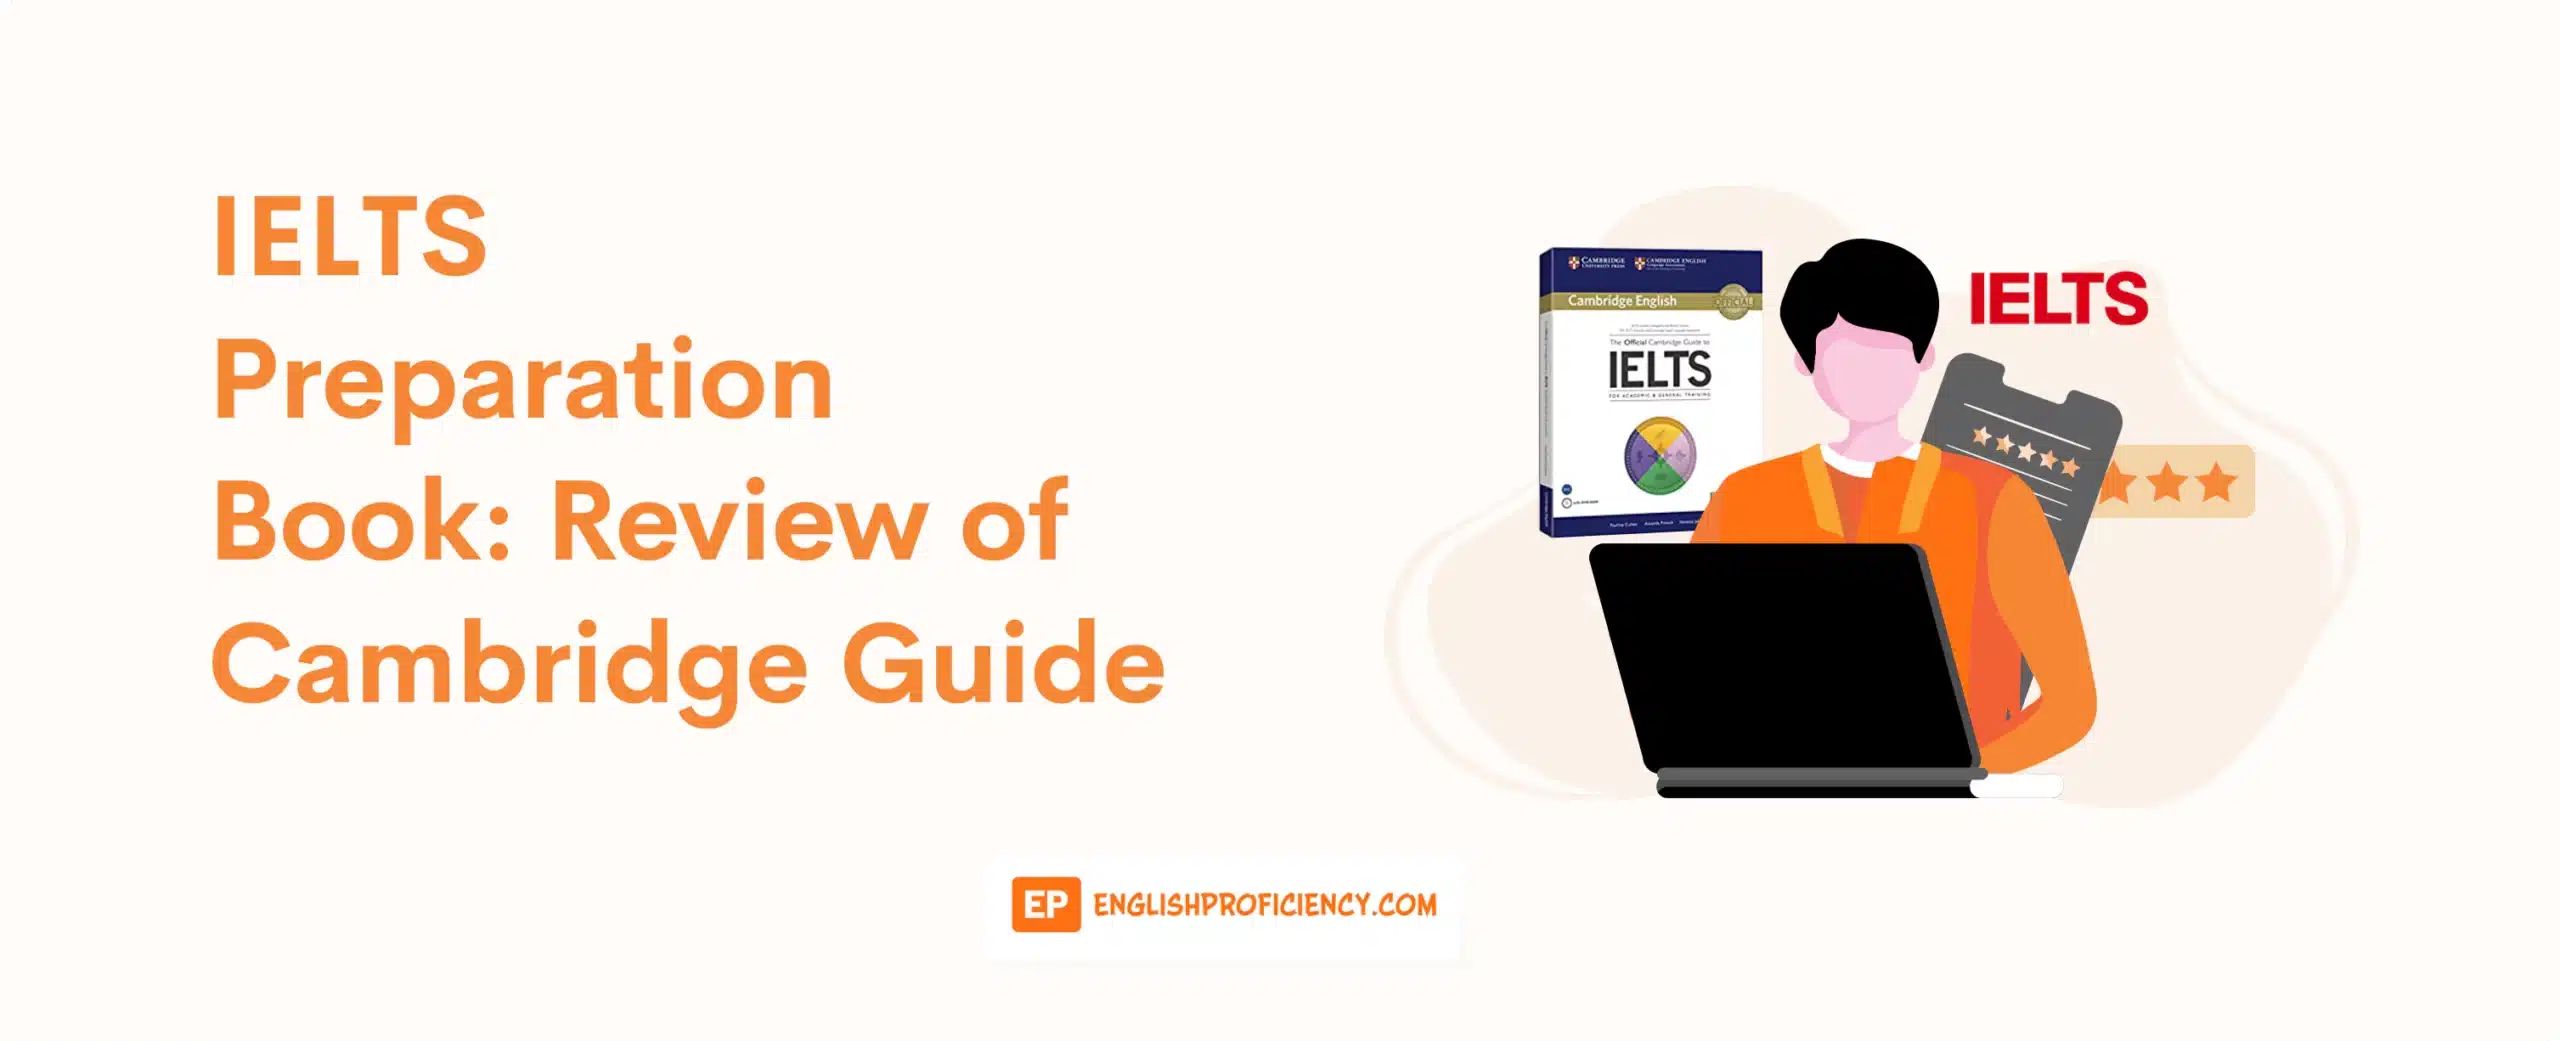 IELTS Preparation Book Review of Cambridge Guide